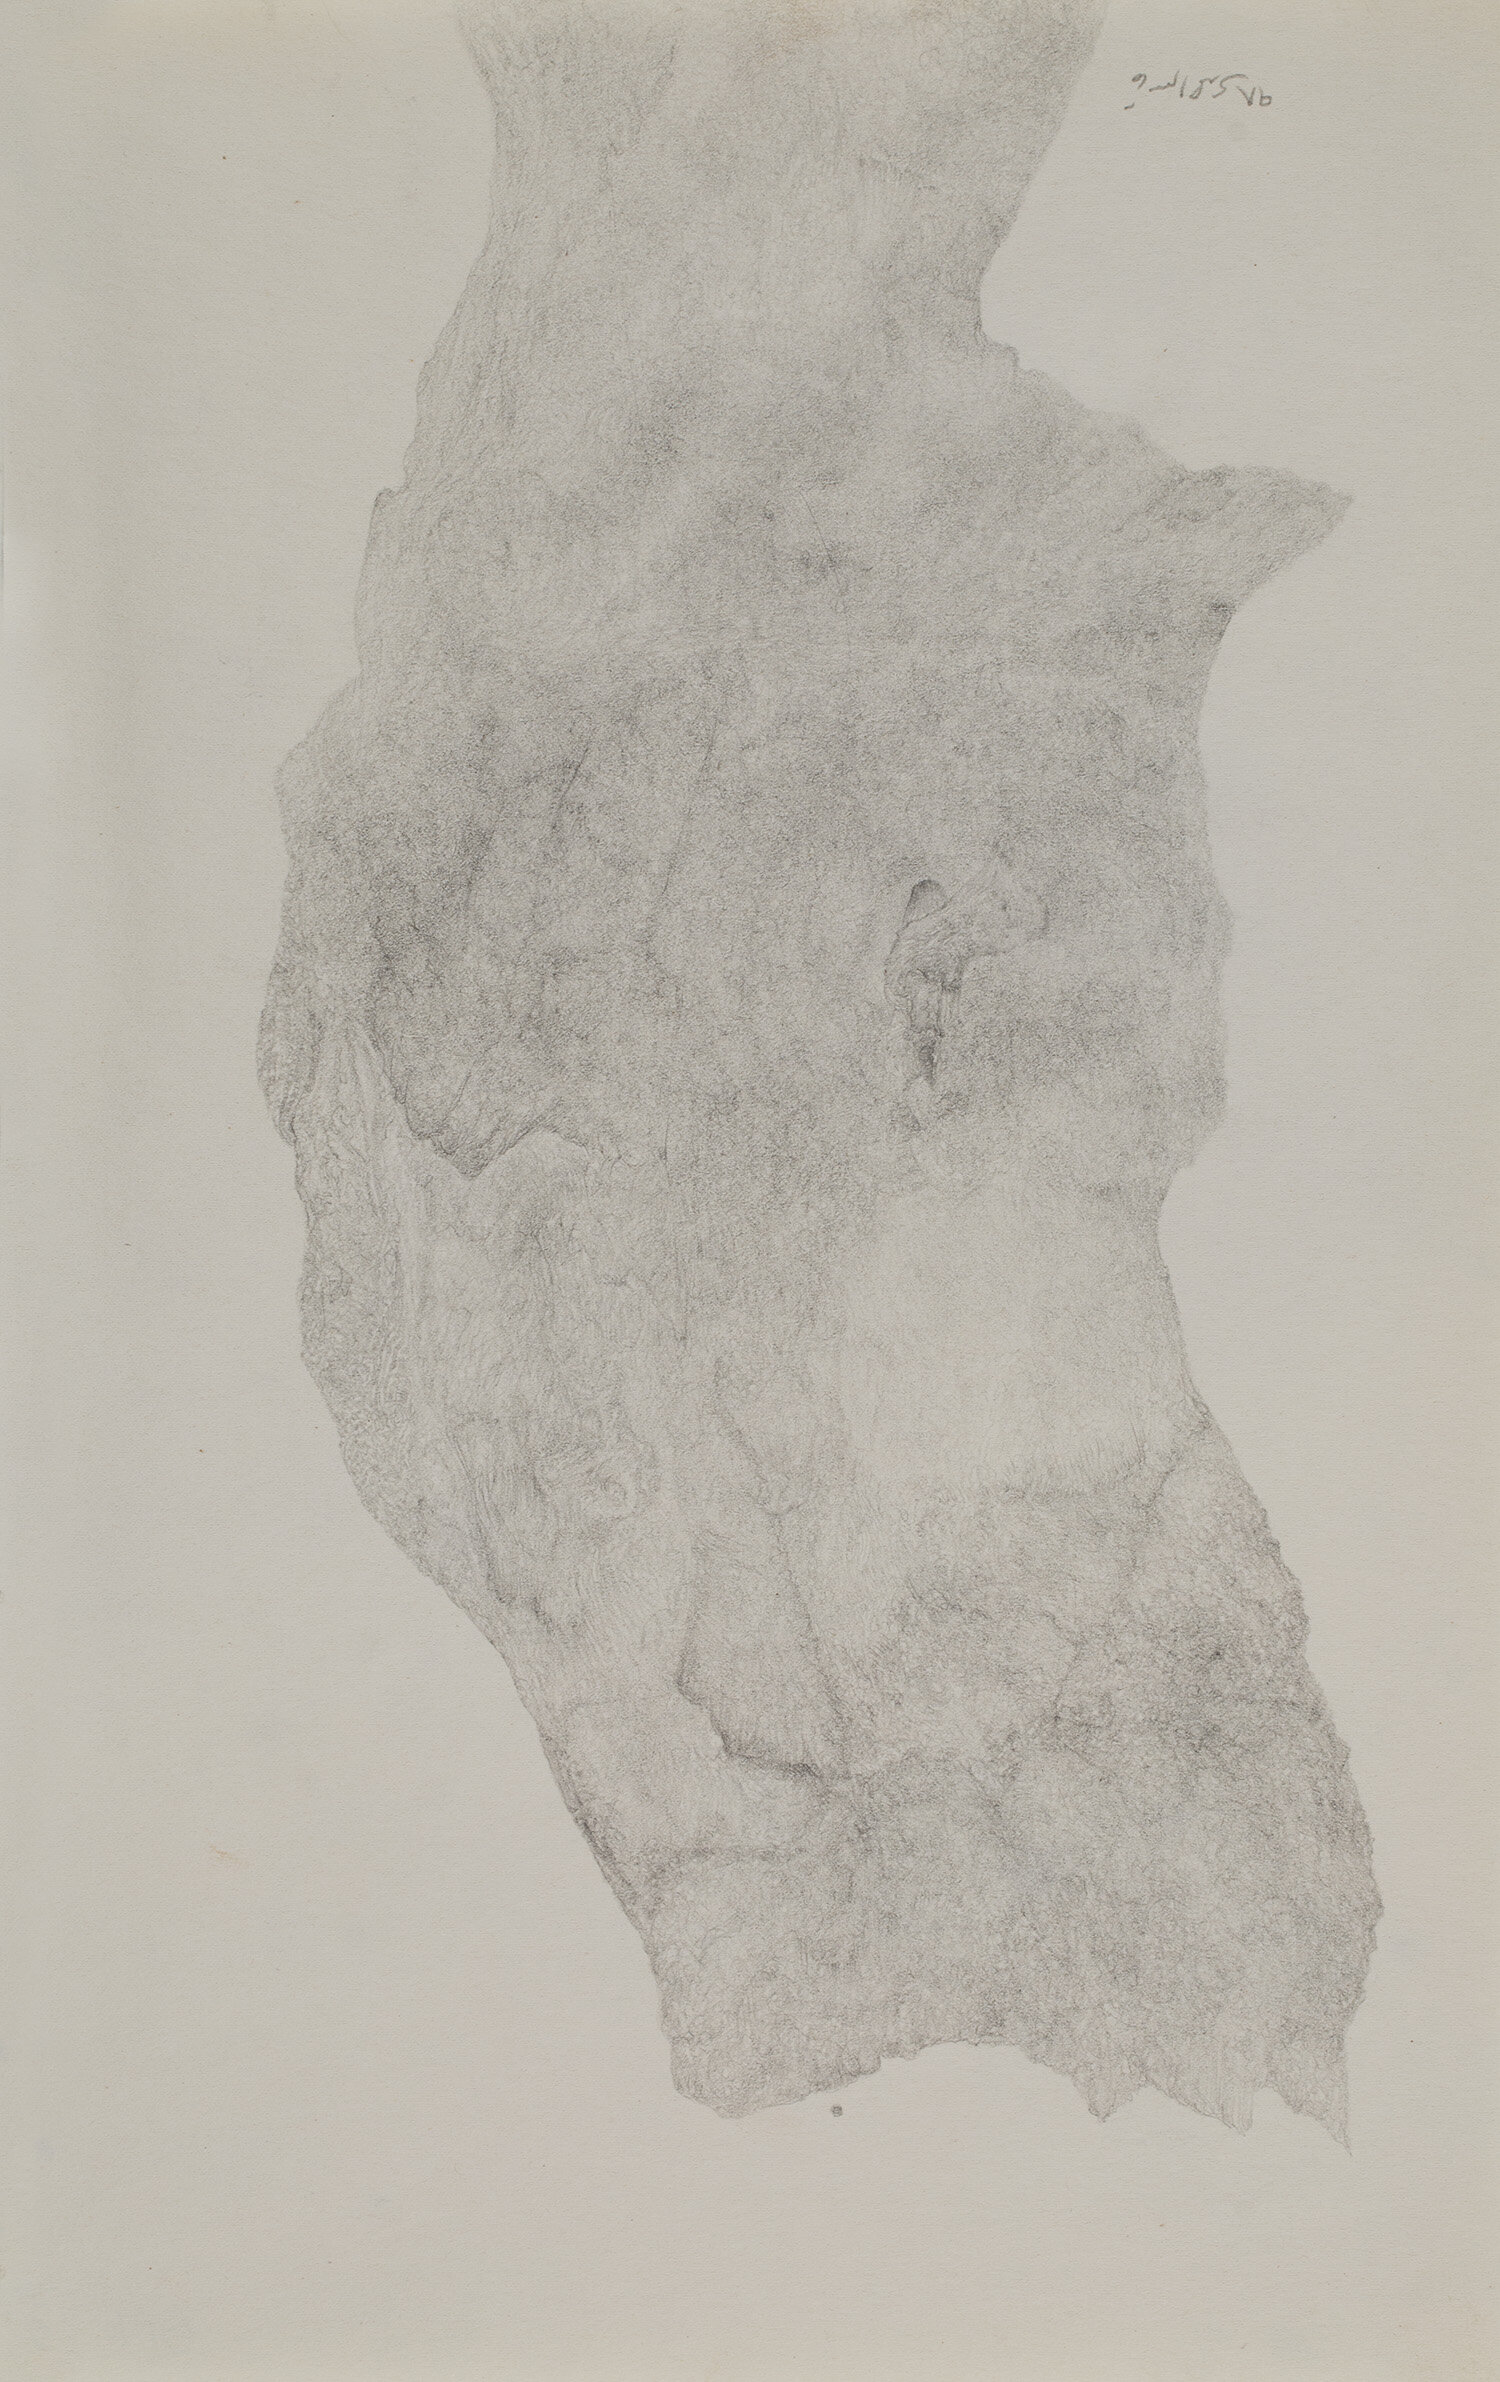   Ghasem Ahmadi     Untitled  , n.d.  Ink on paper  11 x 6.9 inches  27.9 x 17.5 cm  GAh 13 